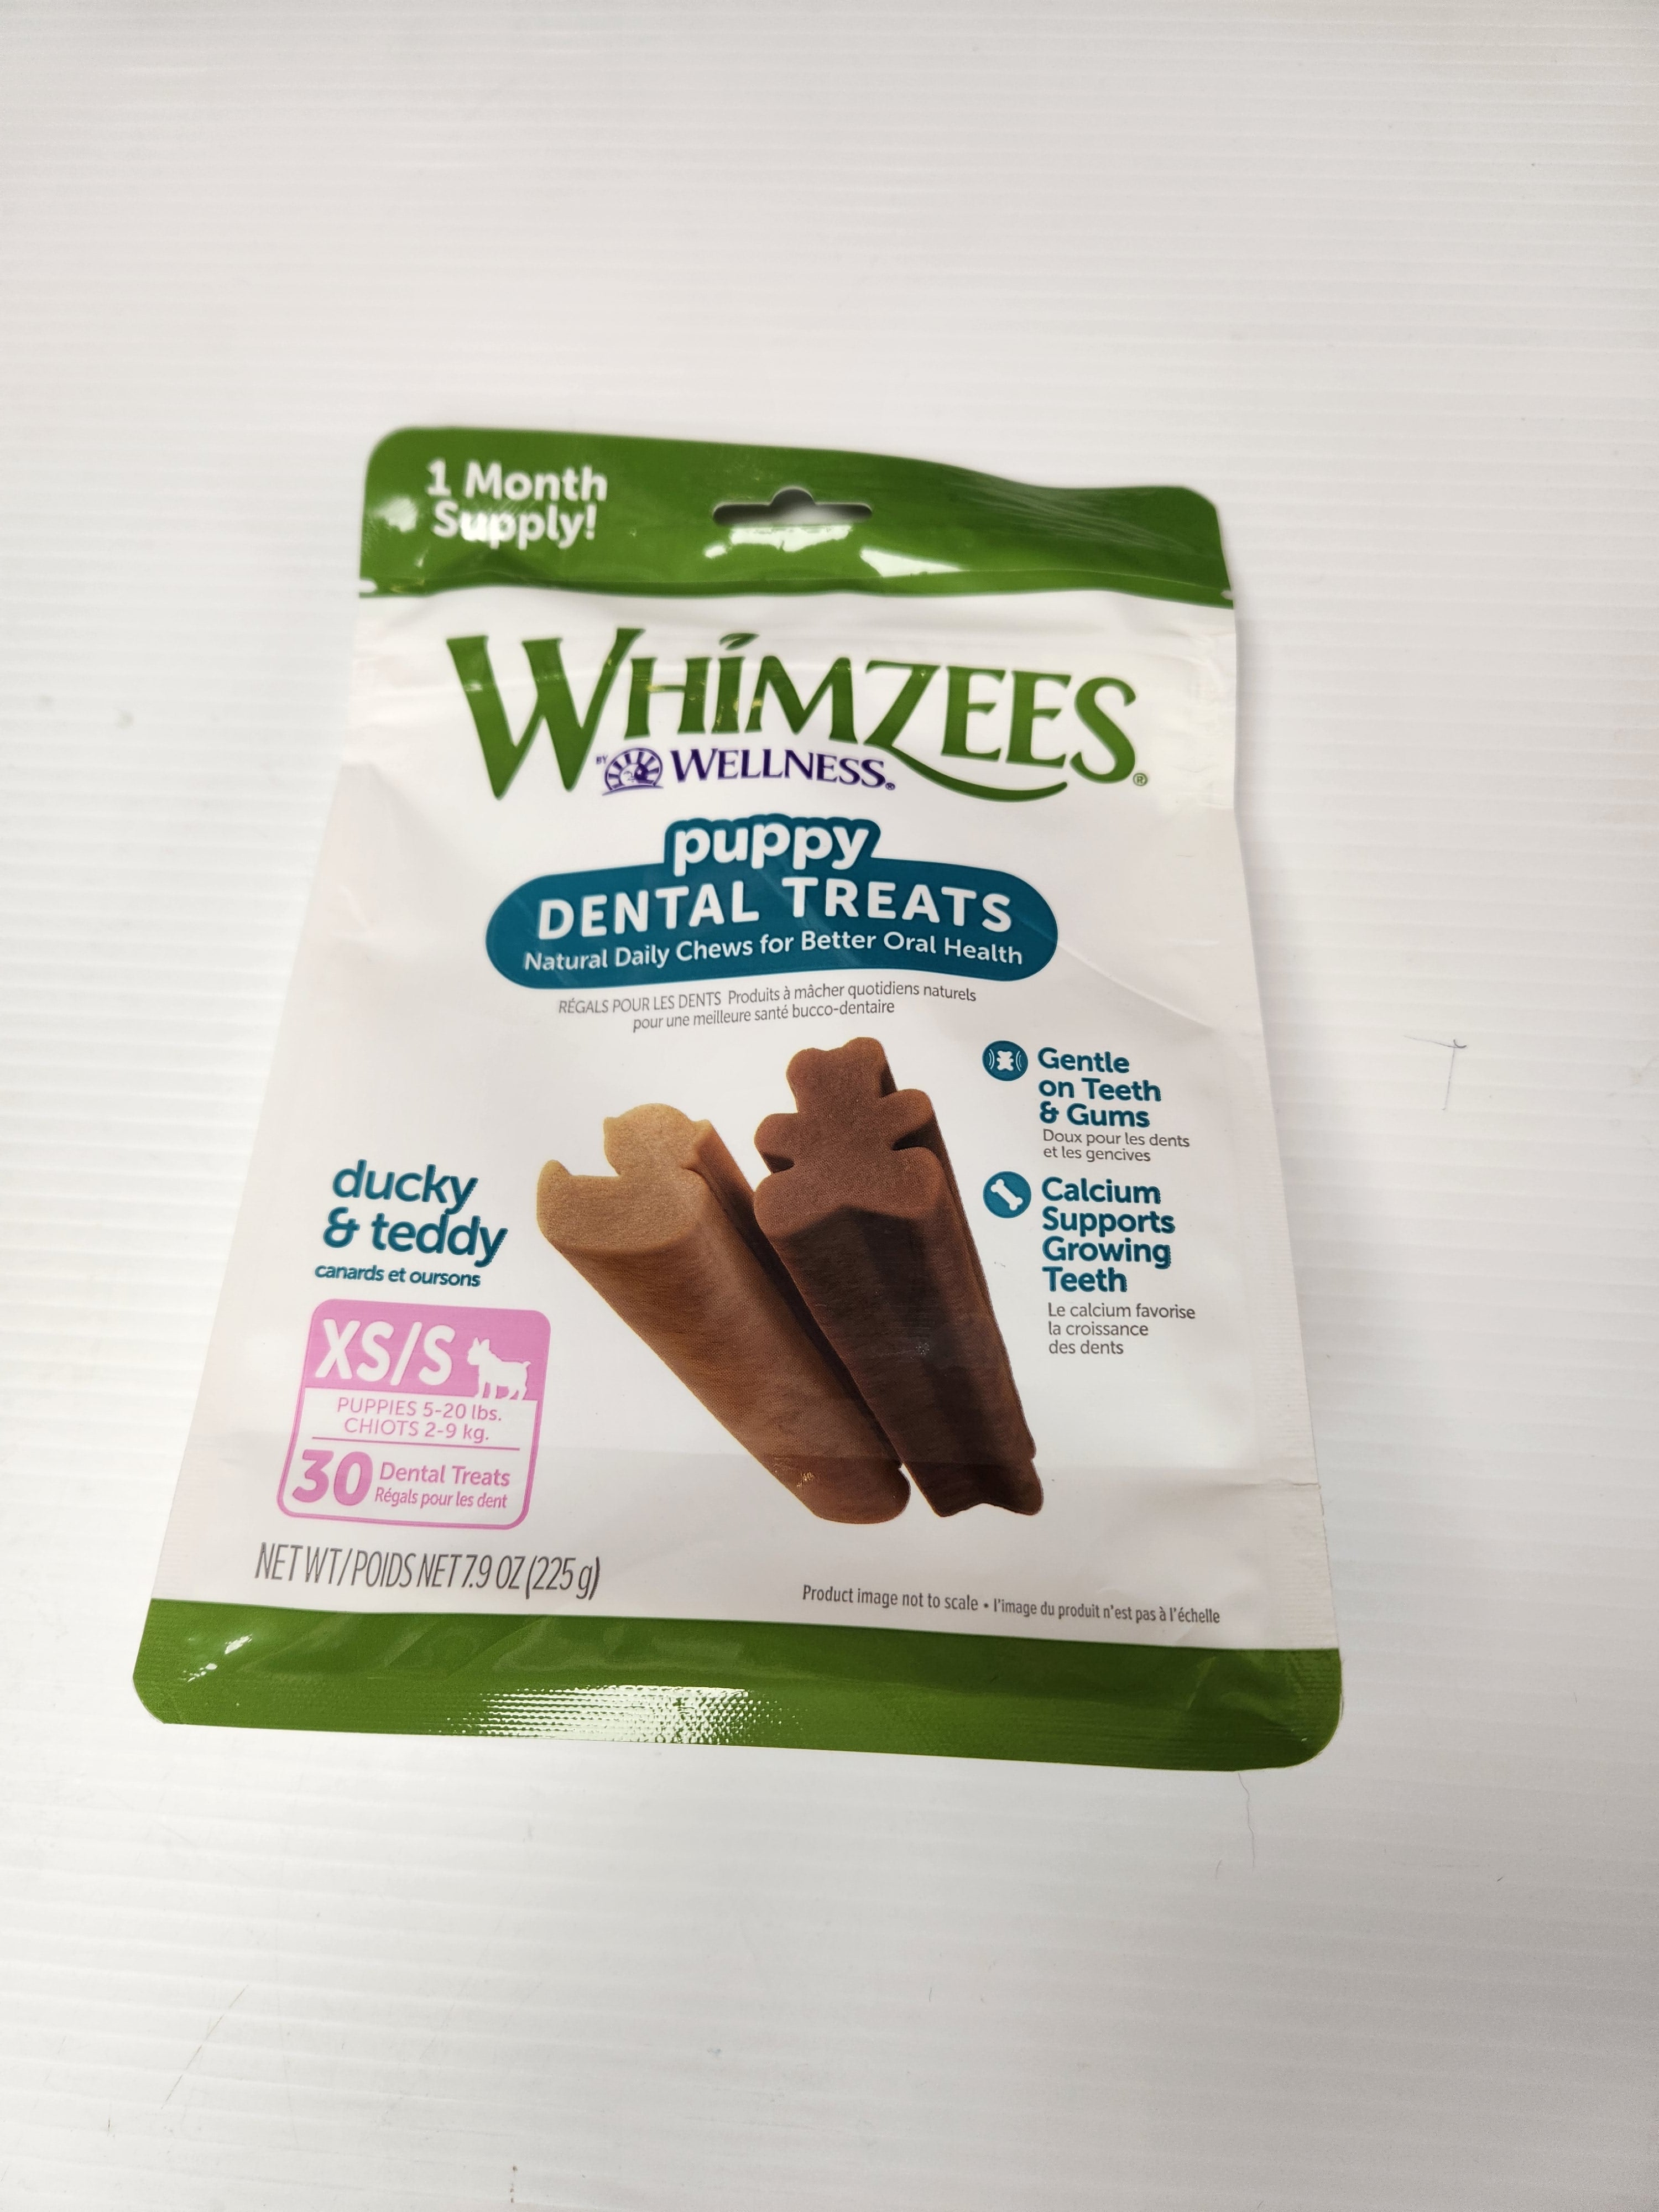 Whimzees Wellness Puppy Dental Treats, XS-S, 30 Treats